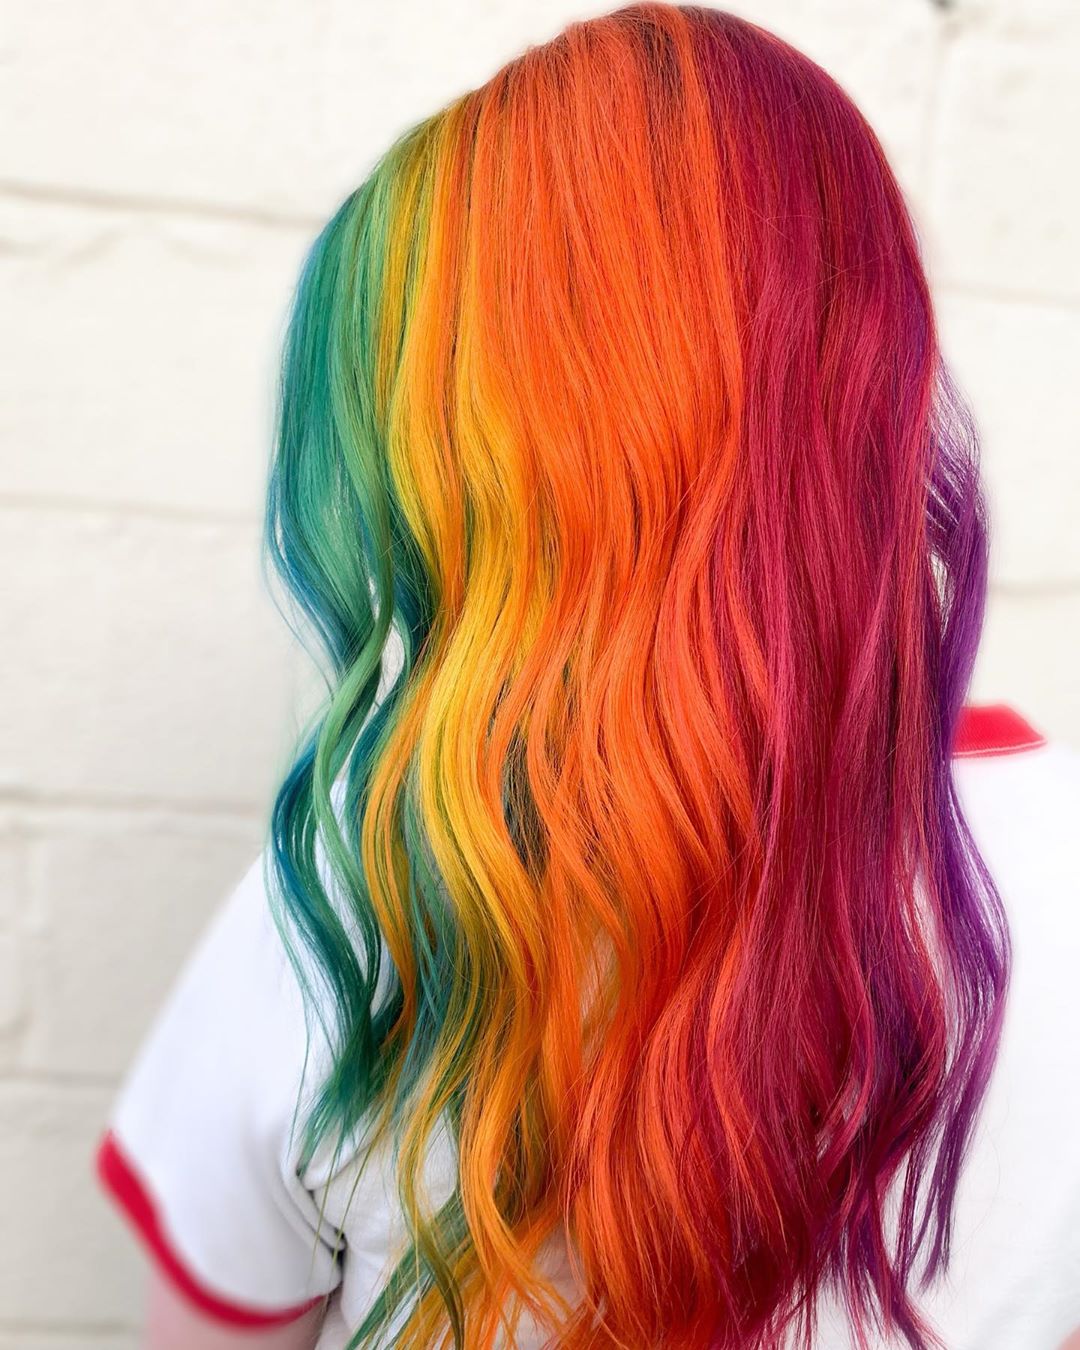 UPDATED] 45 Ways to Rock Rainbow Hair